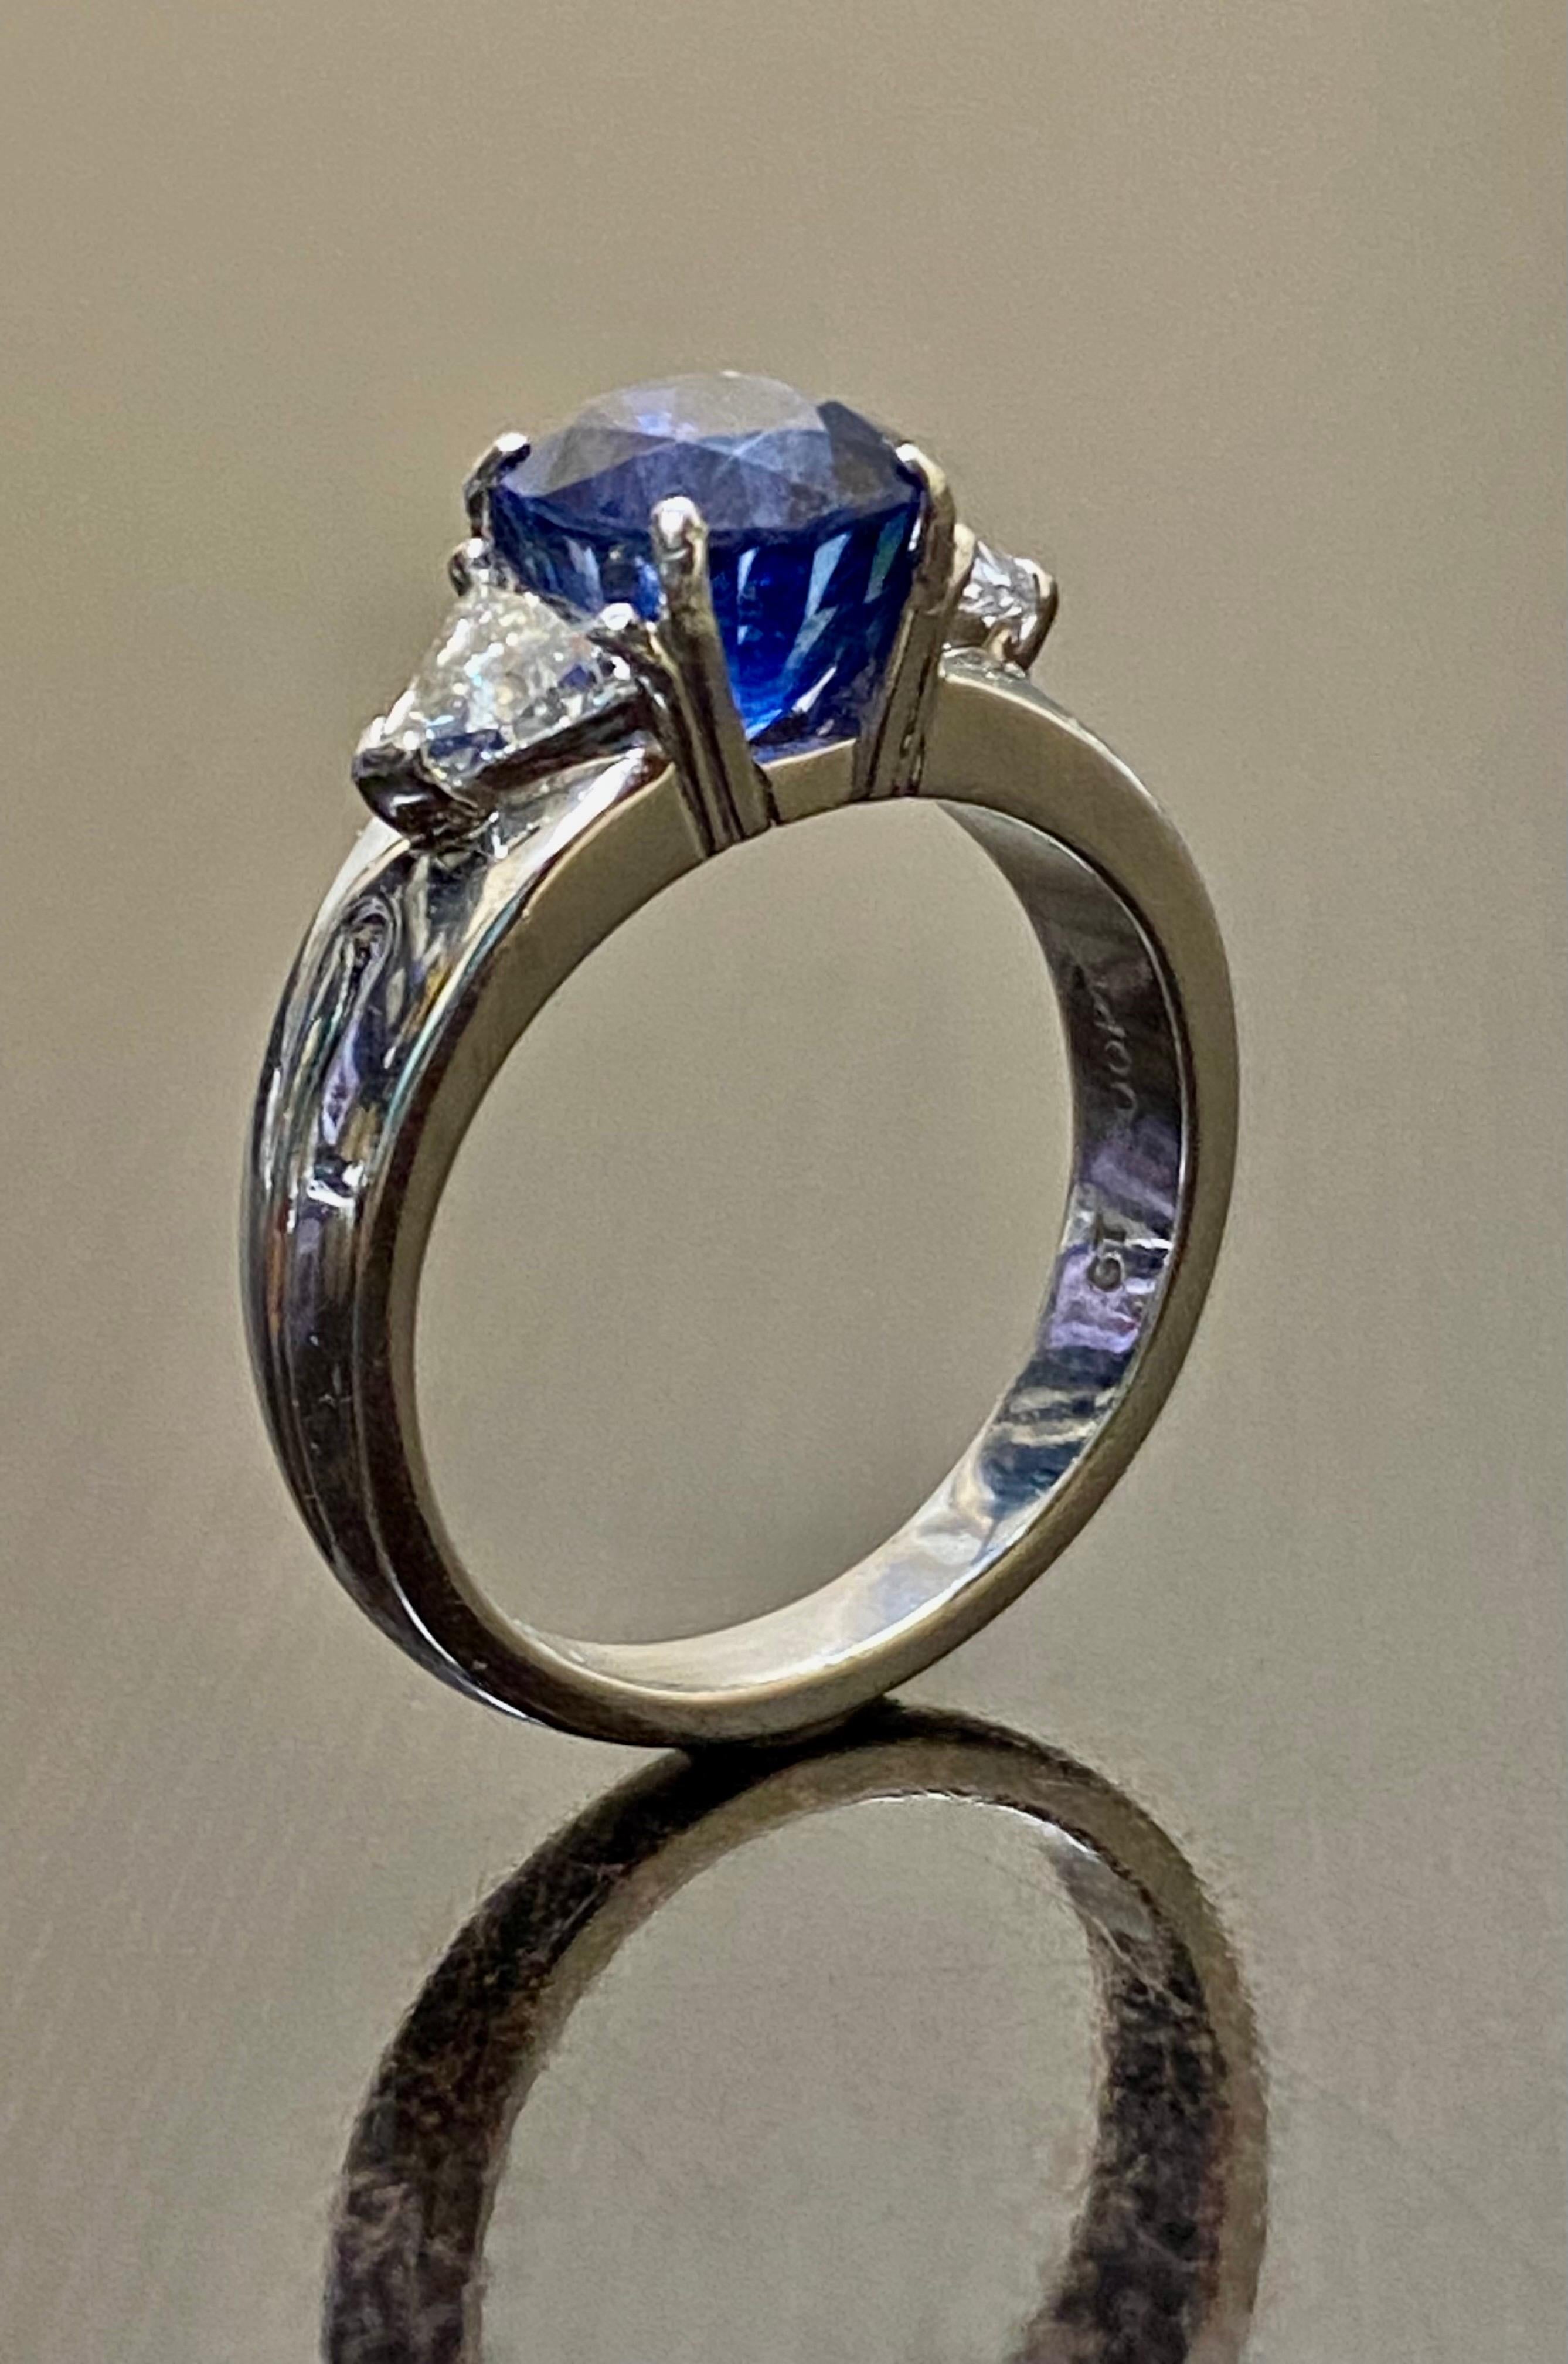 DeKara Designs Collection

Beautiful Modern/Art Deco Ceylon/Sri Lanka Blue Sapphire and Trillion Diamond Three Stone Ring

Metal- 90% Platinum, 10% Iridium

Stones- Genuine Oval Ceylon/Sri Lanka Royal Blue Sapphire 4.10 Carats. Two Trillion Cut